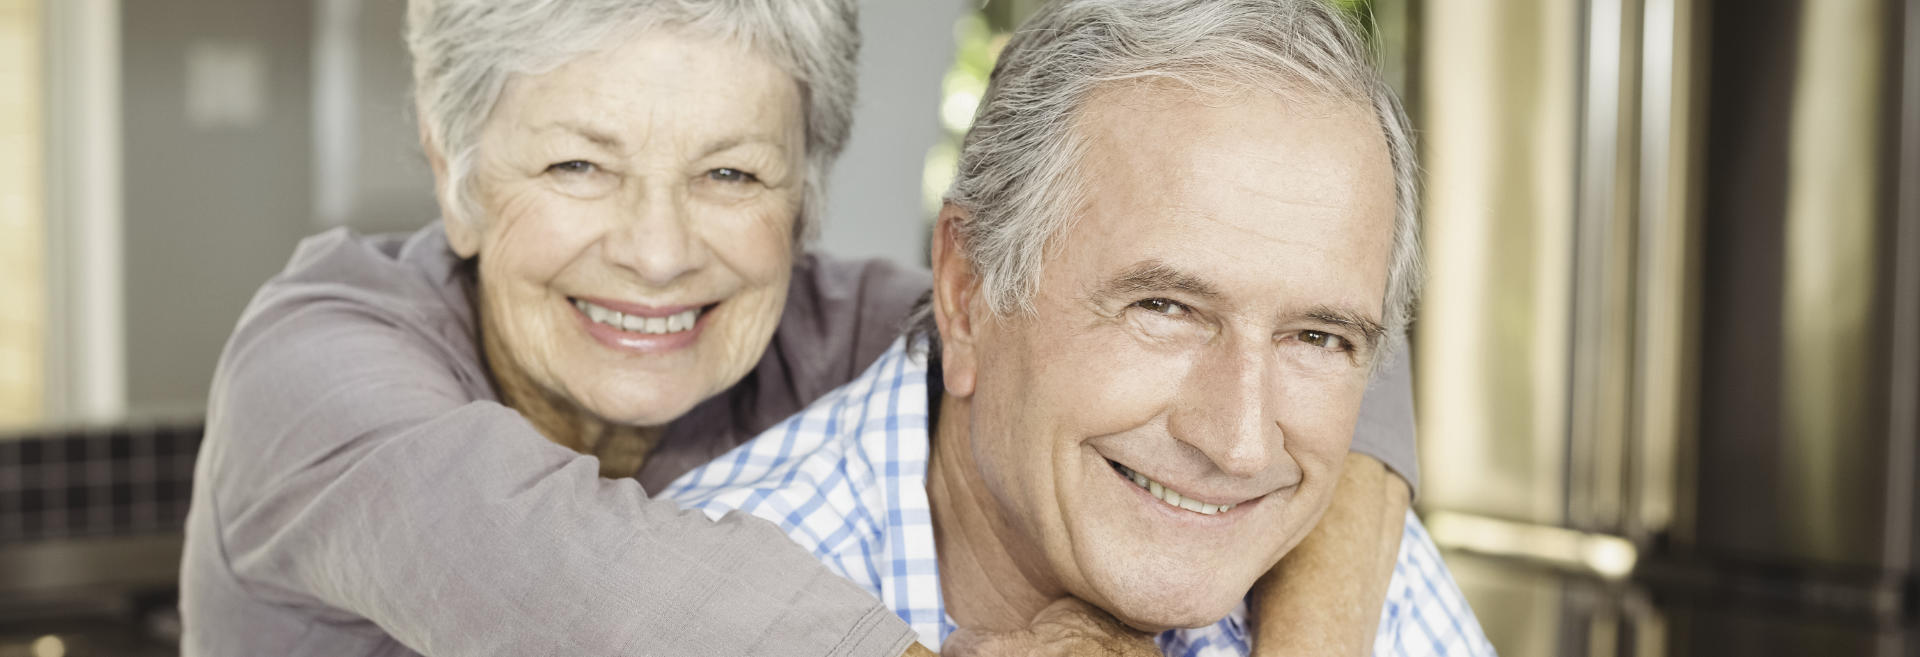 broadly smiling senior couple